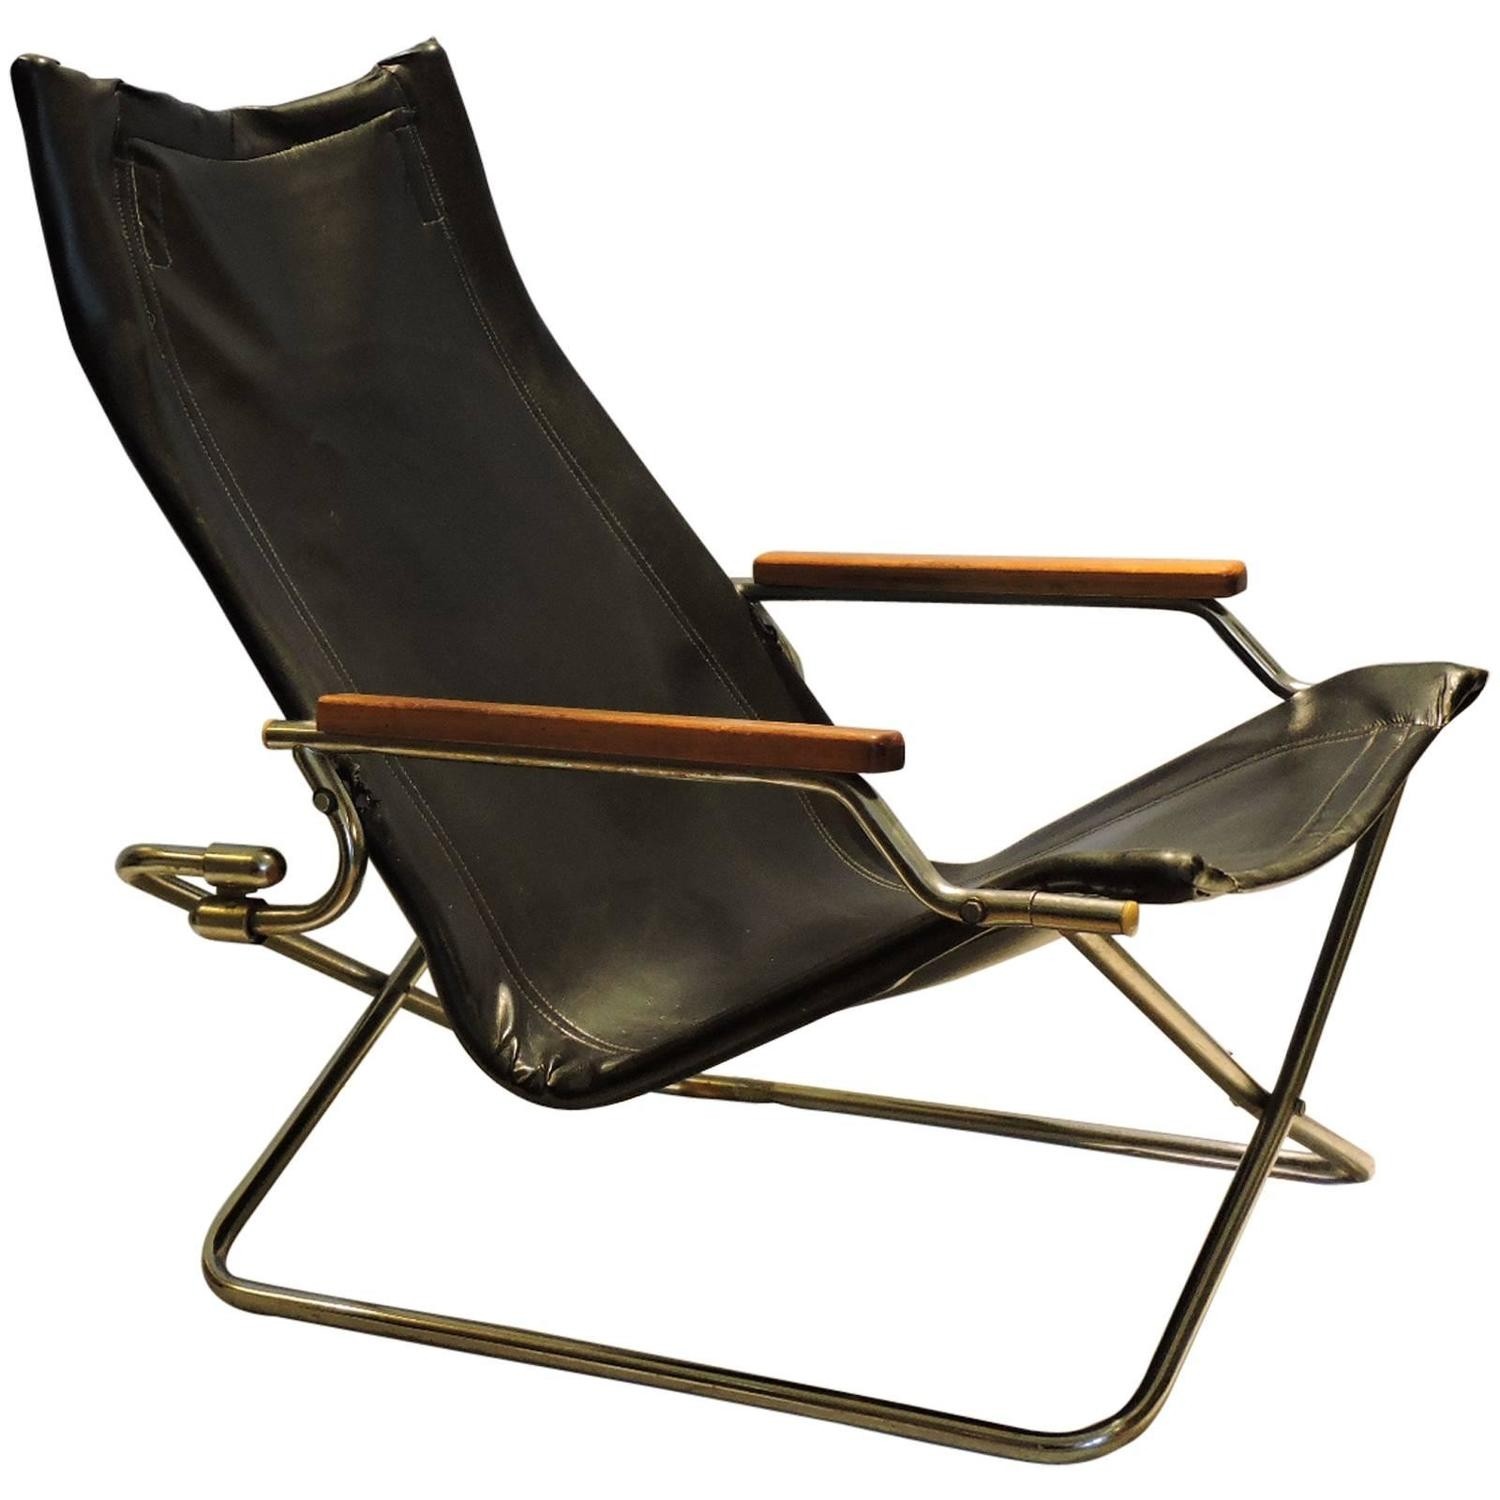 Japanese modernist folding sling chair by uchida at 1stdibs